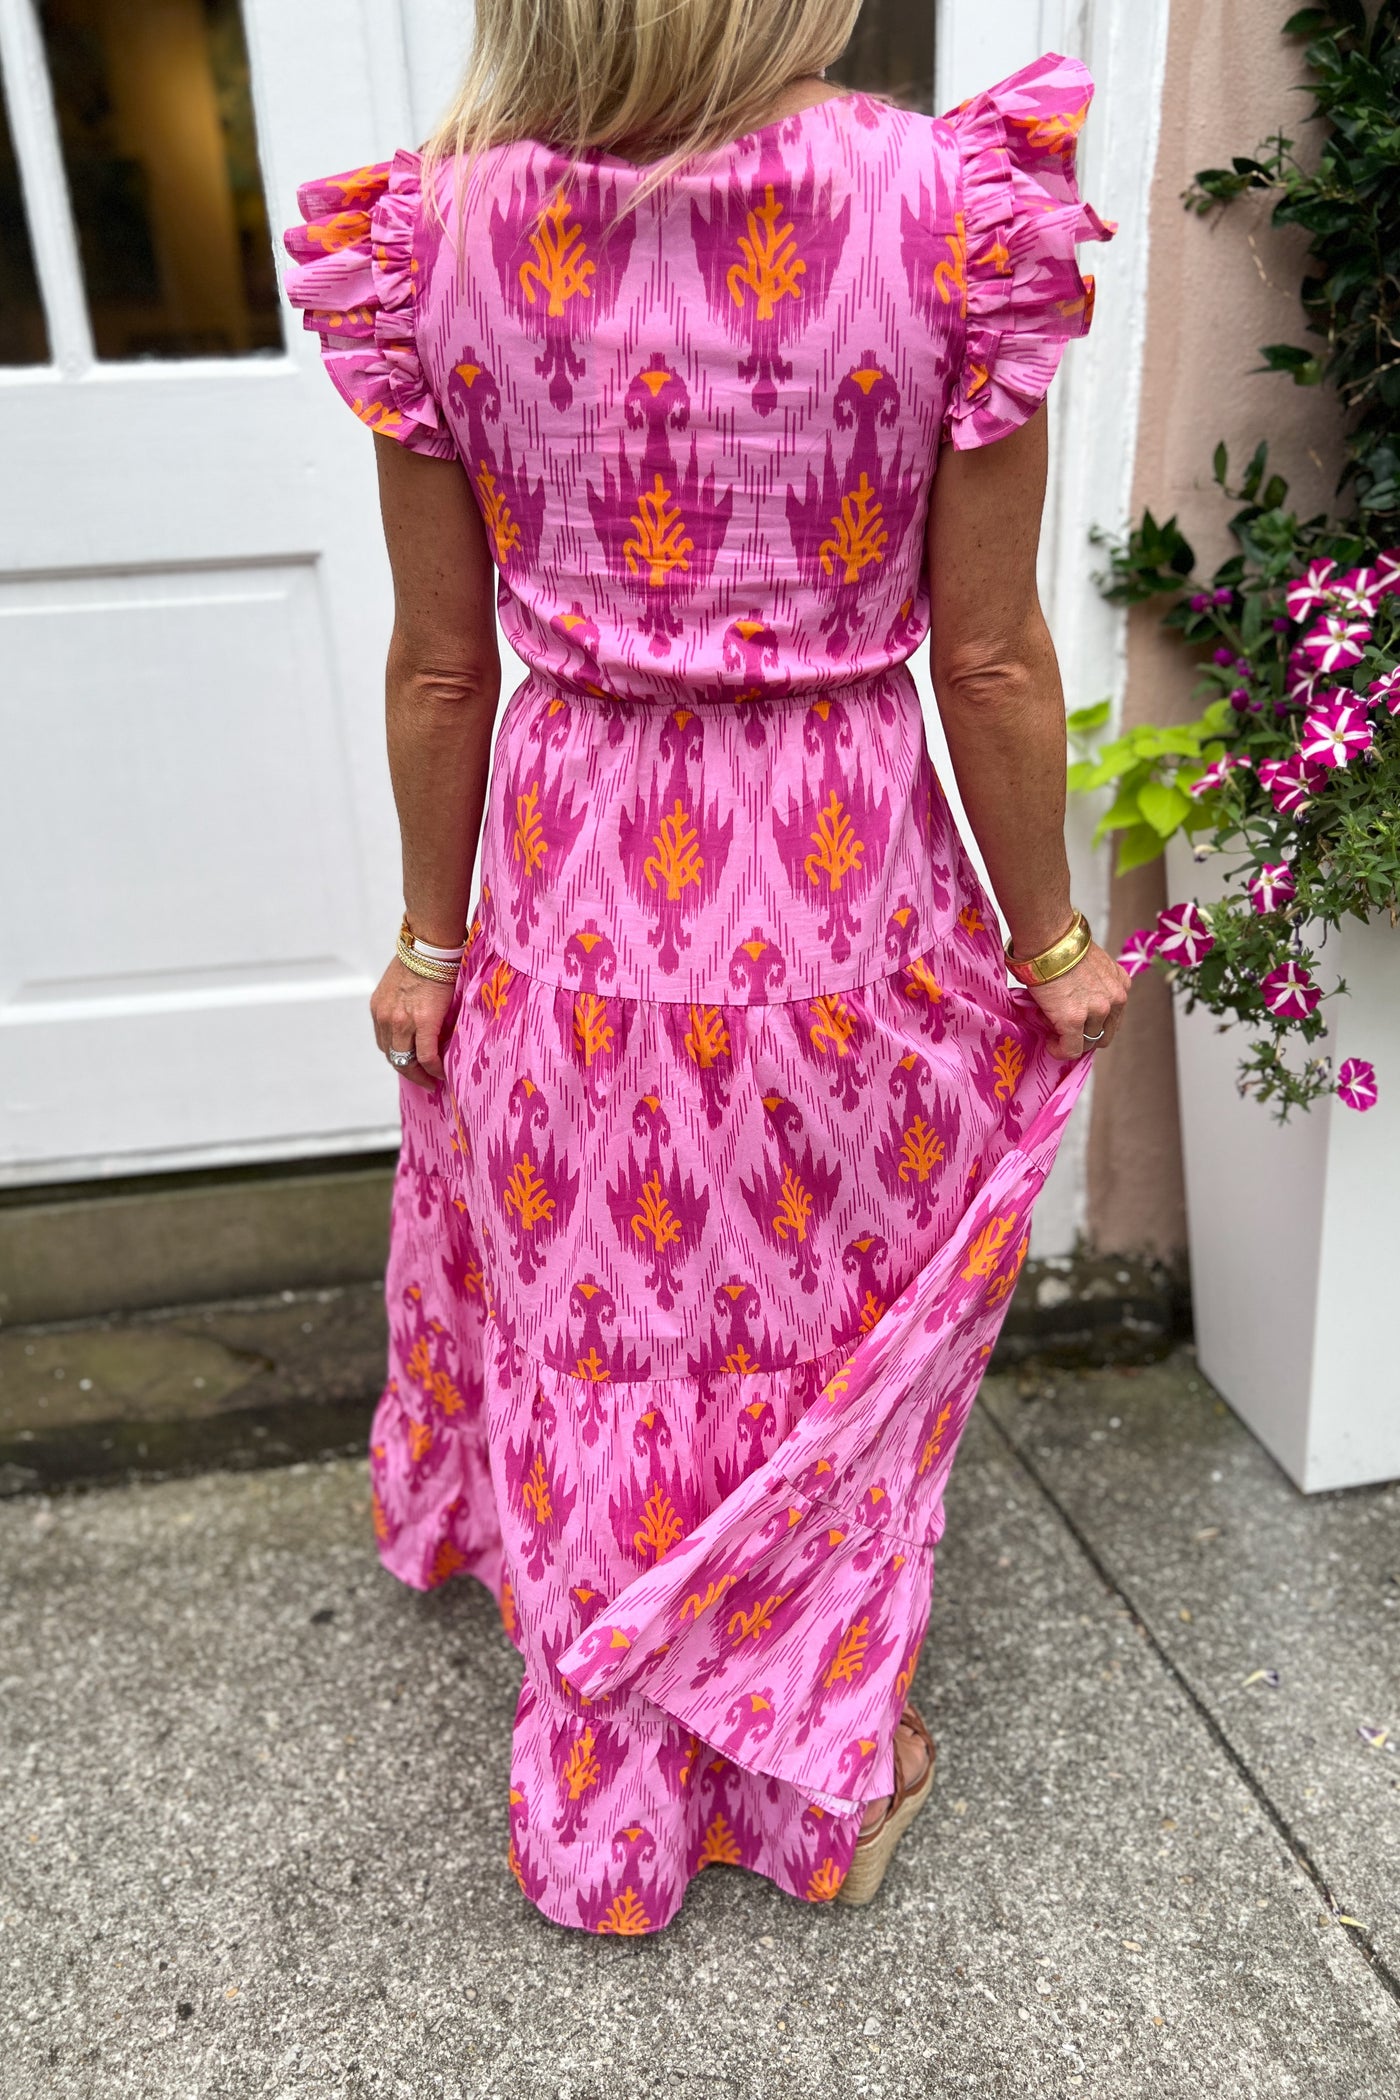 Grayton Beach dress, pink IKAT print by King + Pitt